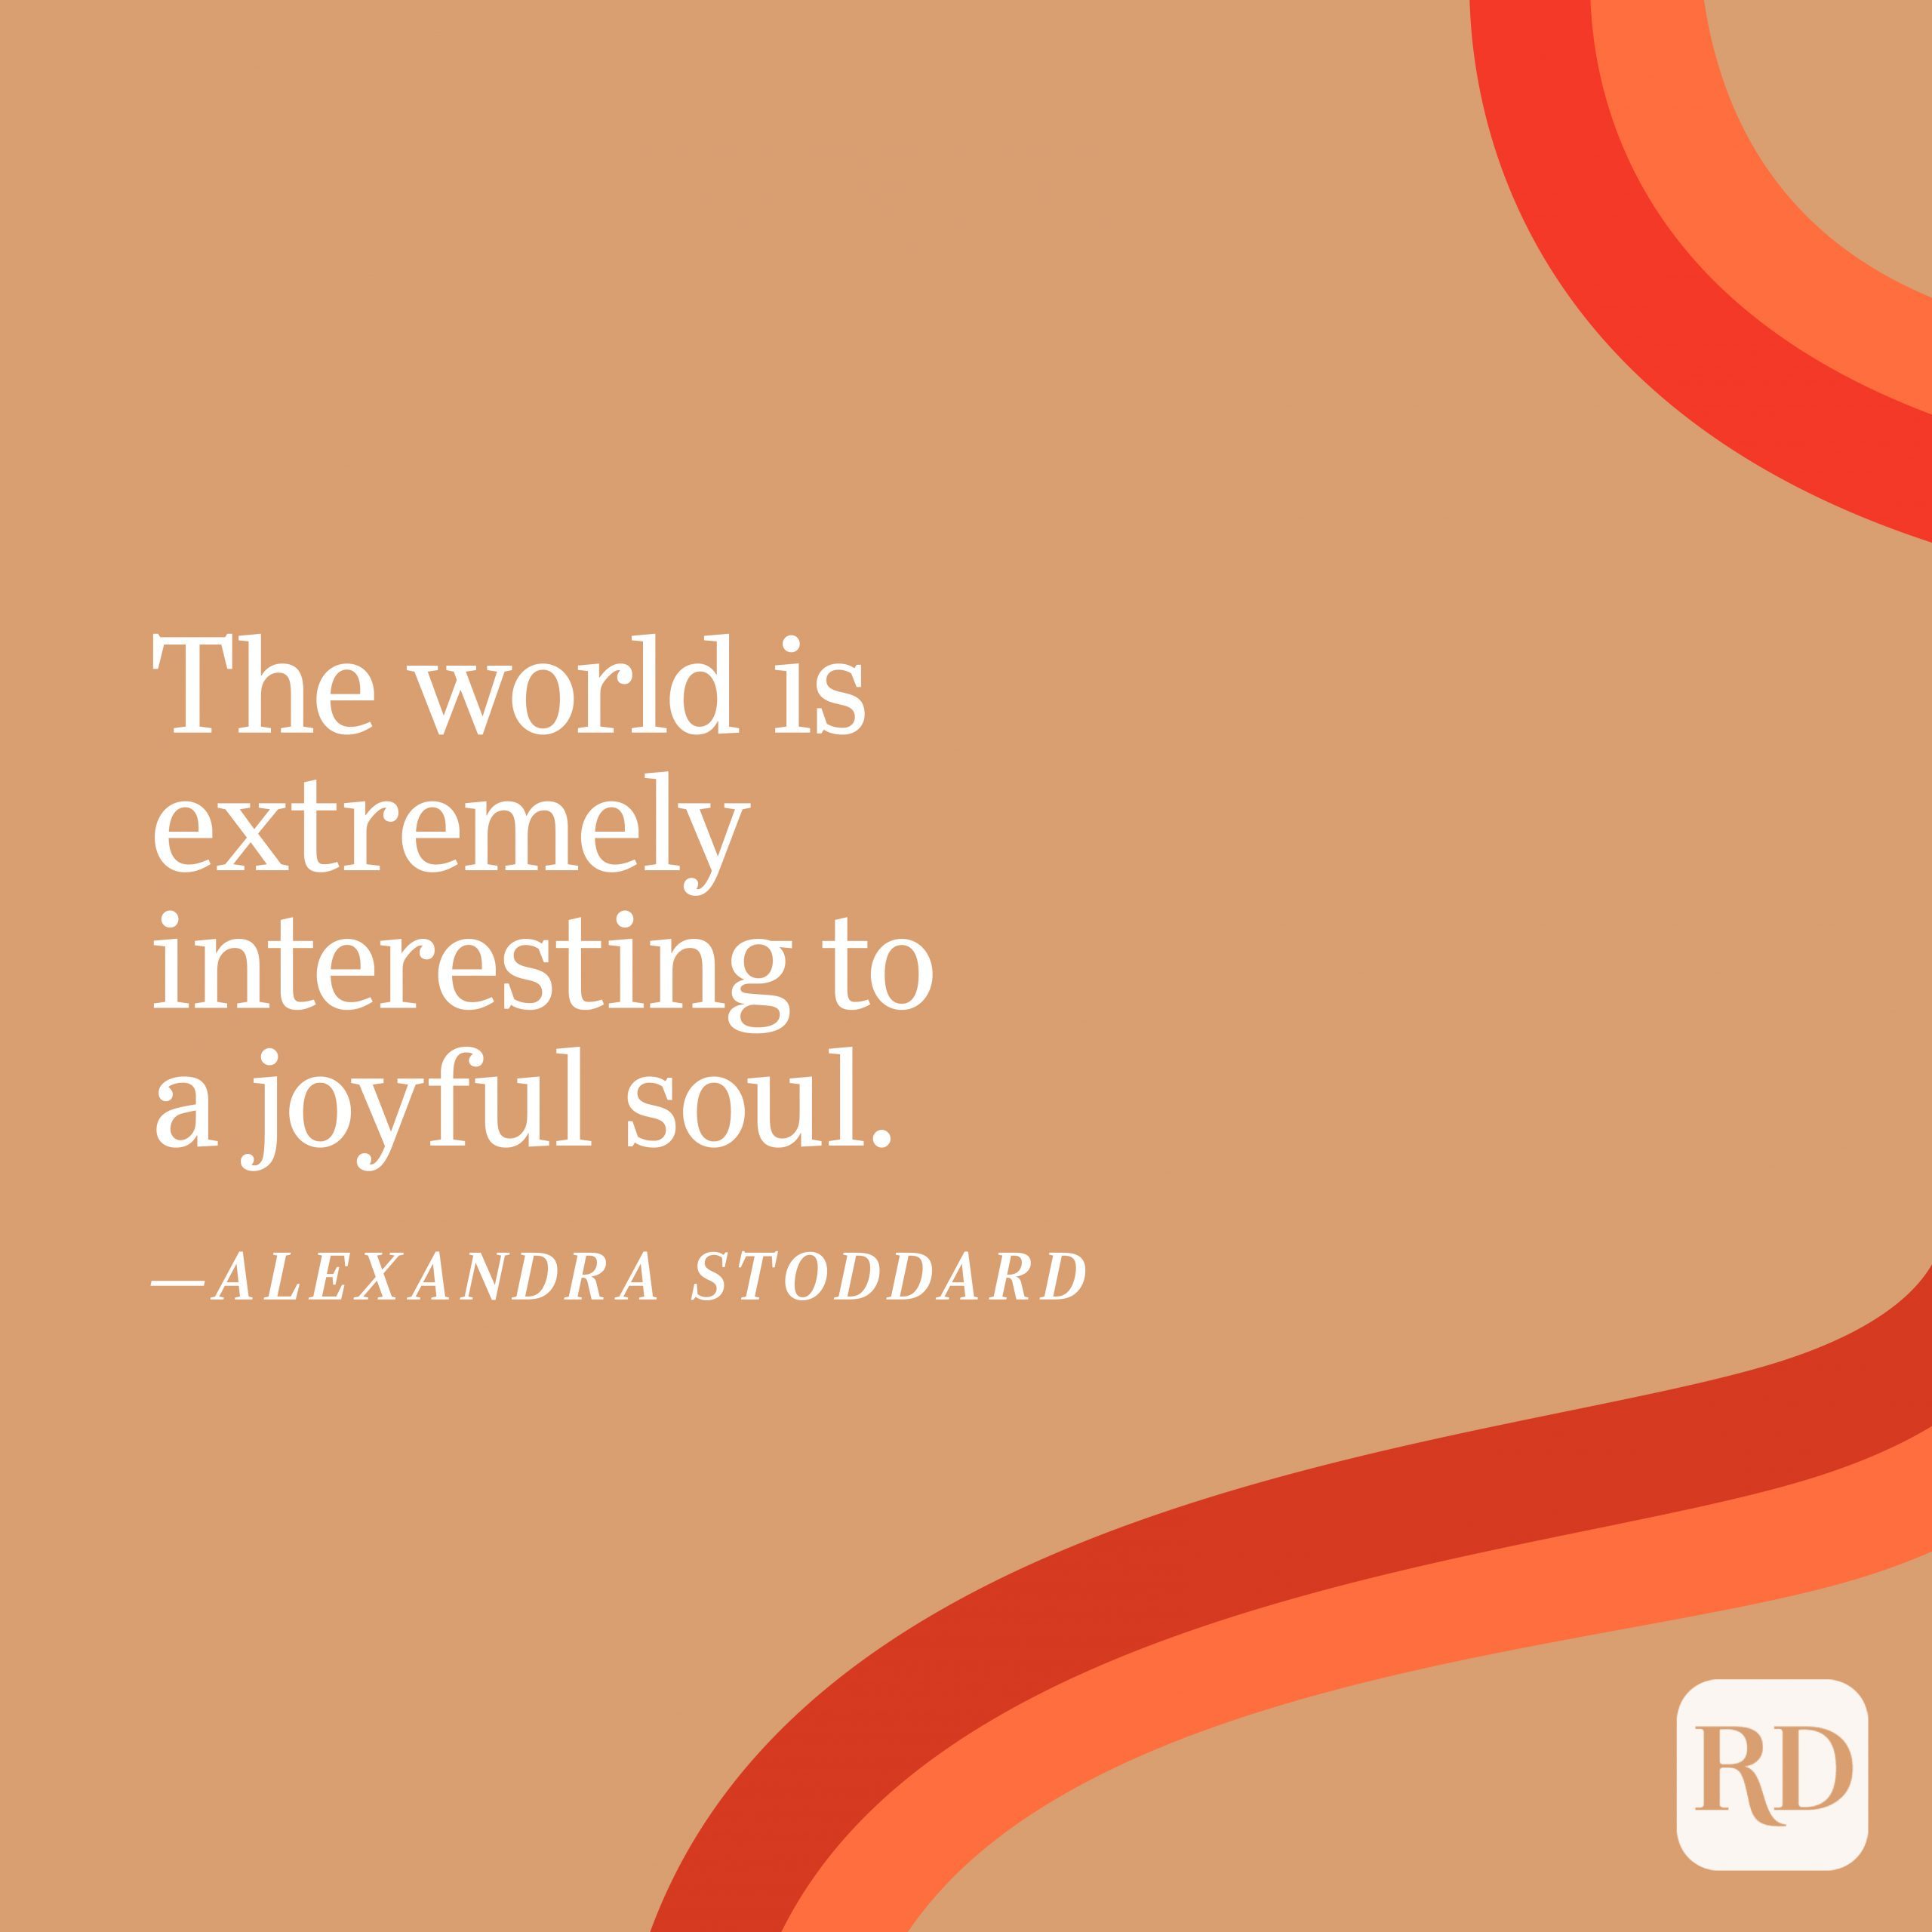 Alexandra Stoddard Uplifting Quote